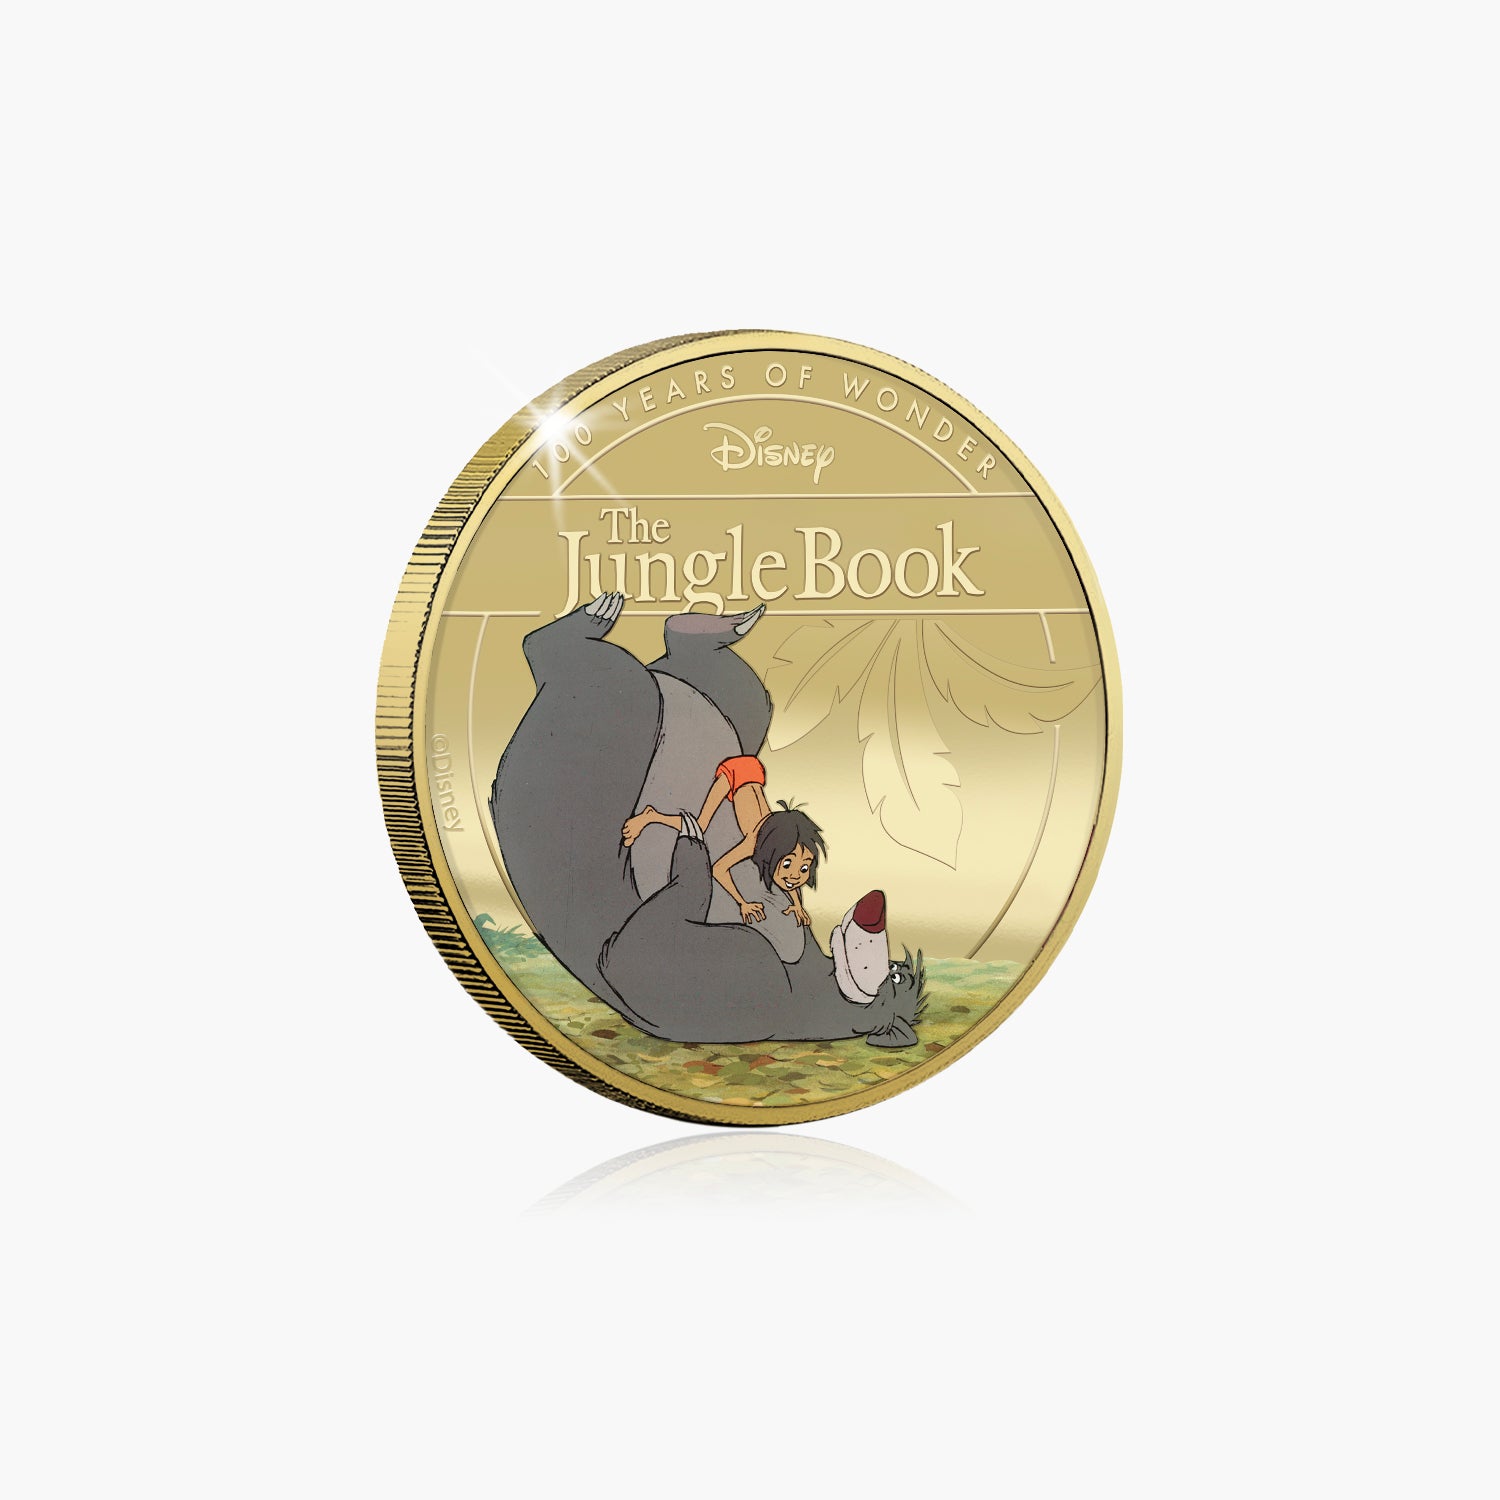 D100 Disney Jungle Book Gold Plated Commemorative